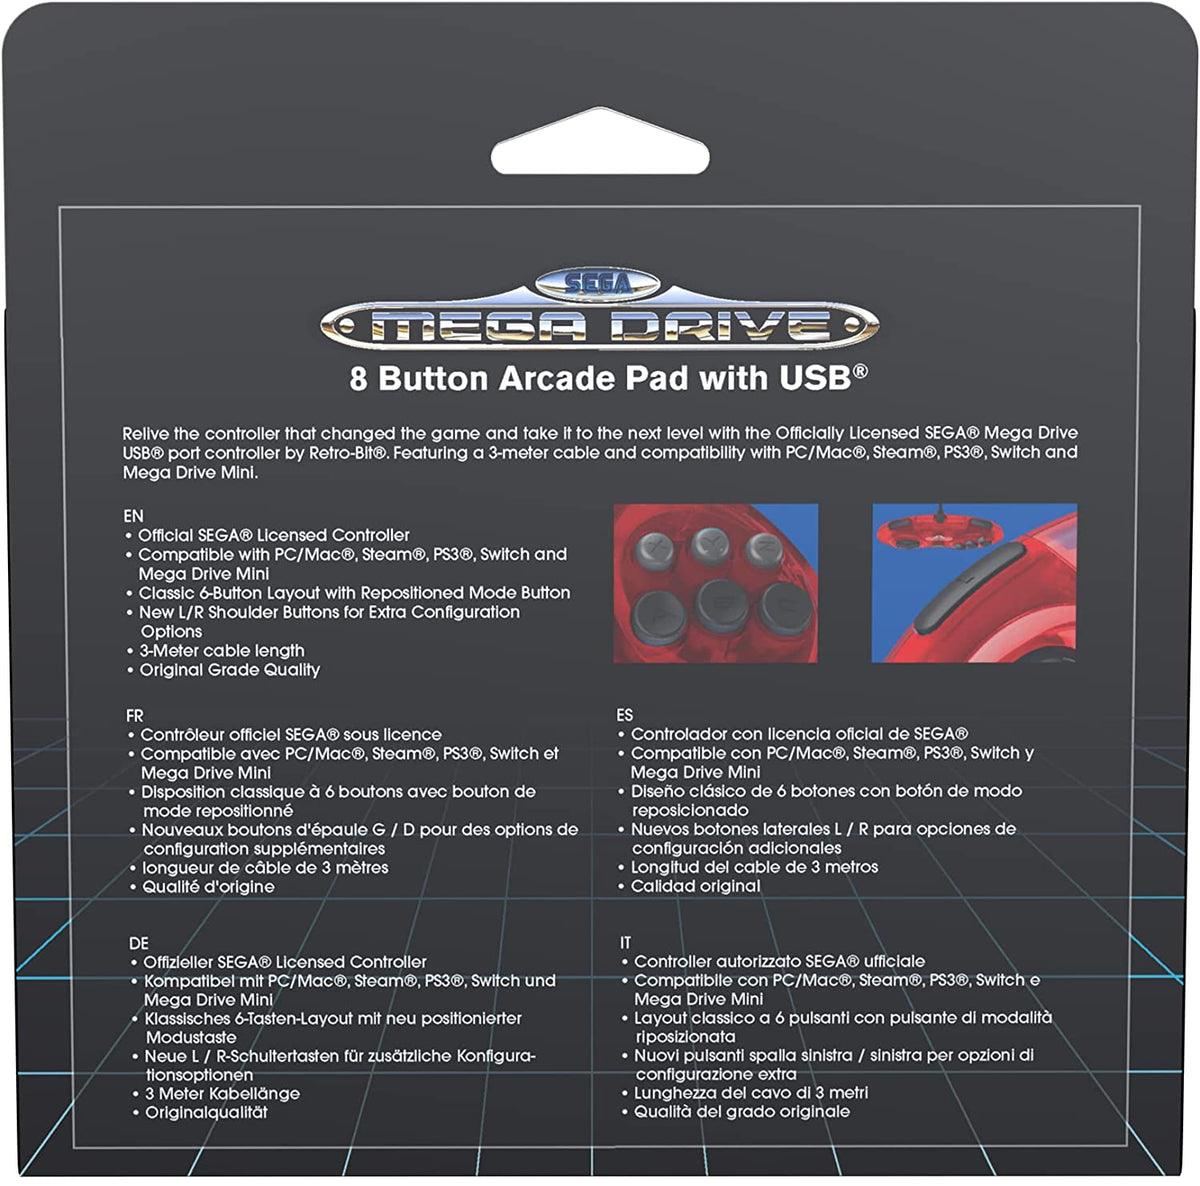 Retro-Bit Sega Mega Drive 8-button USB controller crimson red Gamesellers.nl